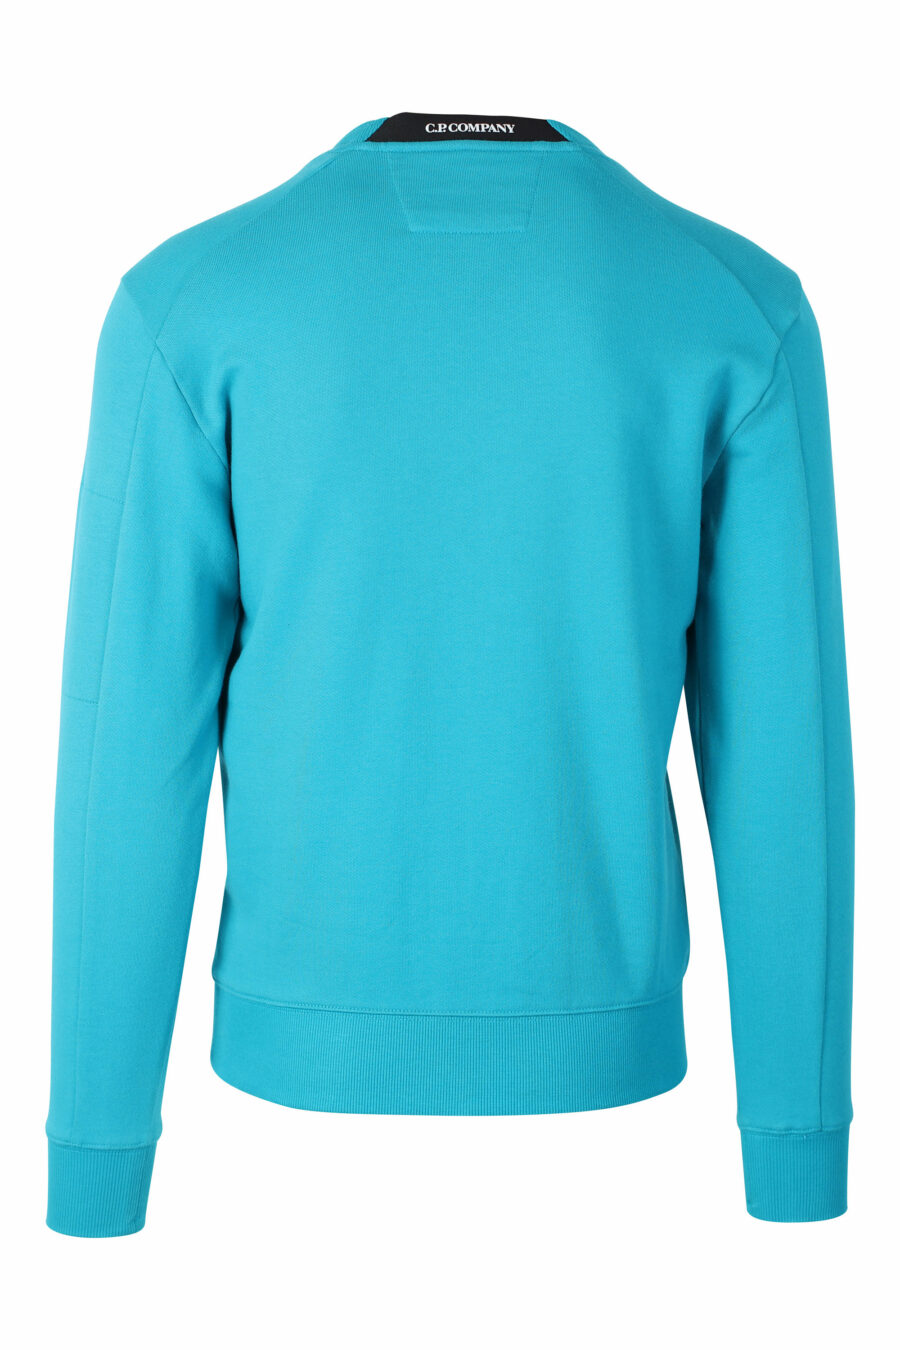 Turquoise sweatshirt with circular mini-logo on the side - IMG 2394